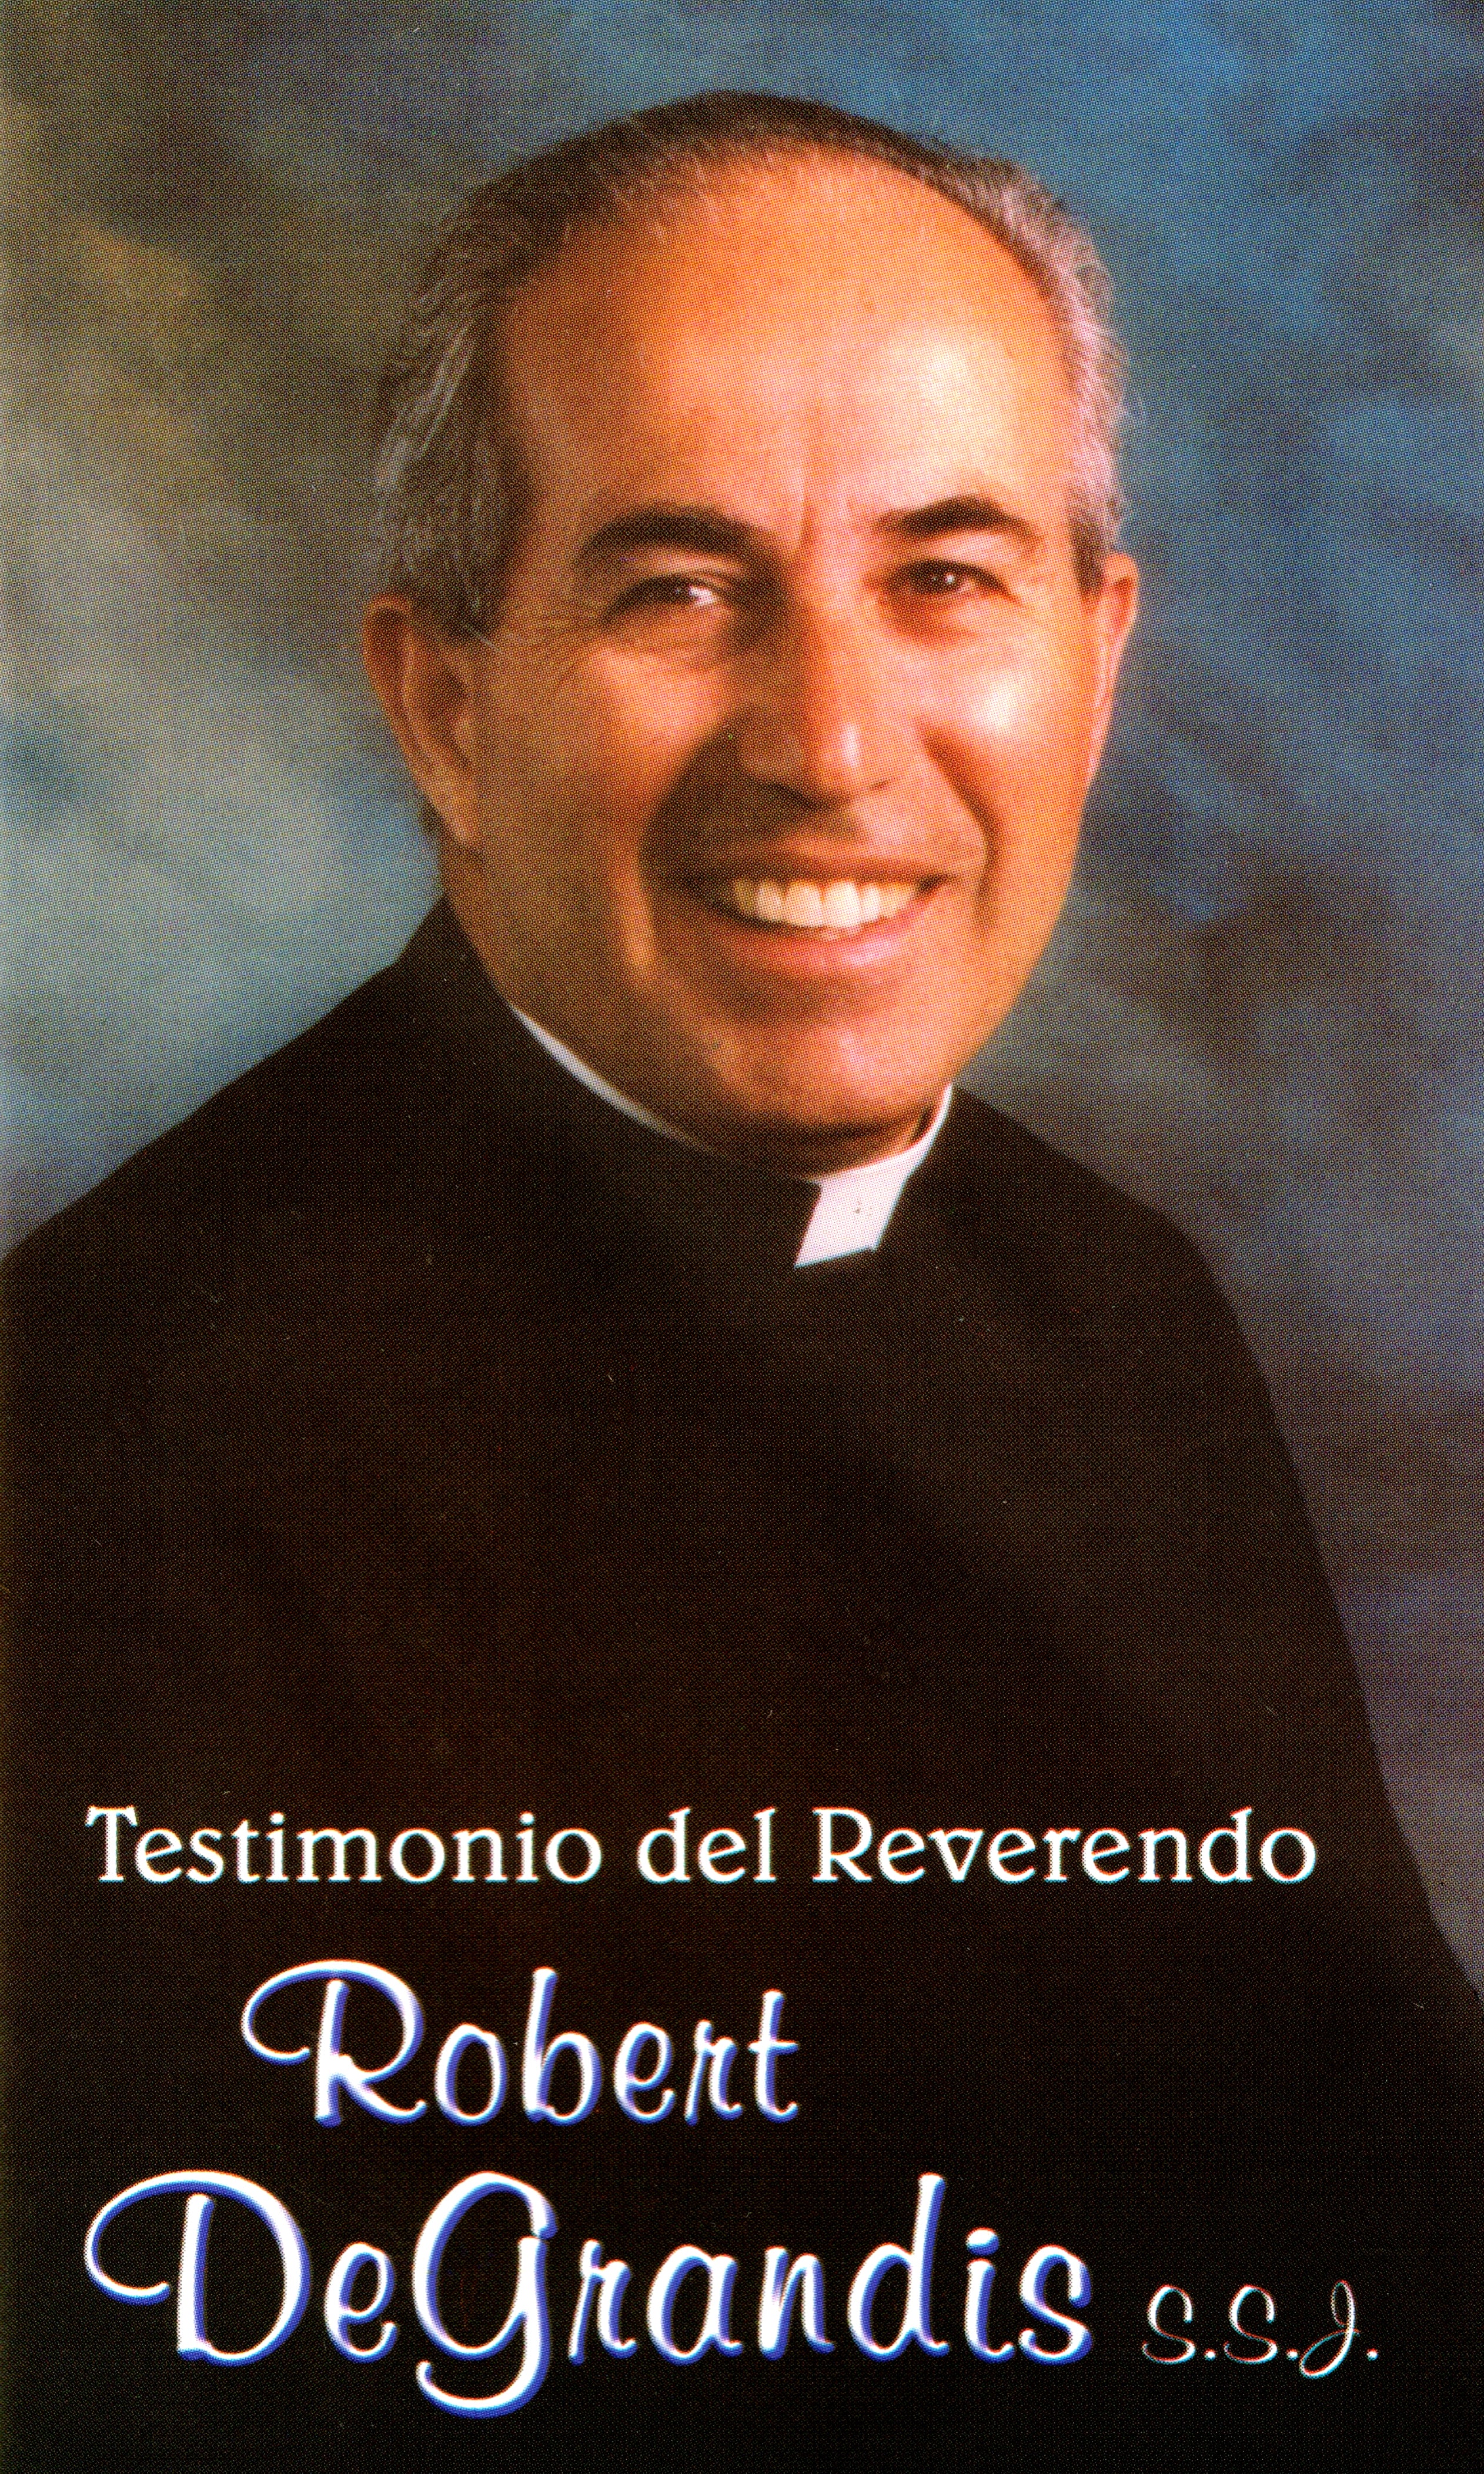 Testimonio del Reverendo Robert DeGrandis